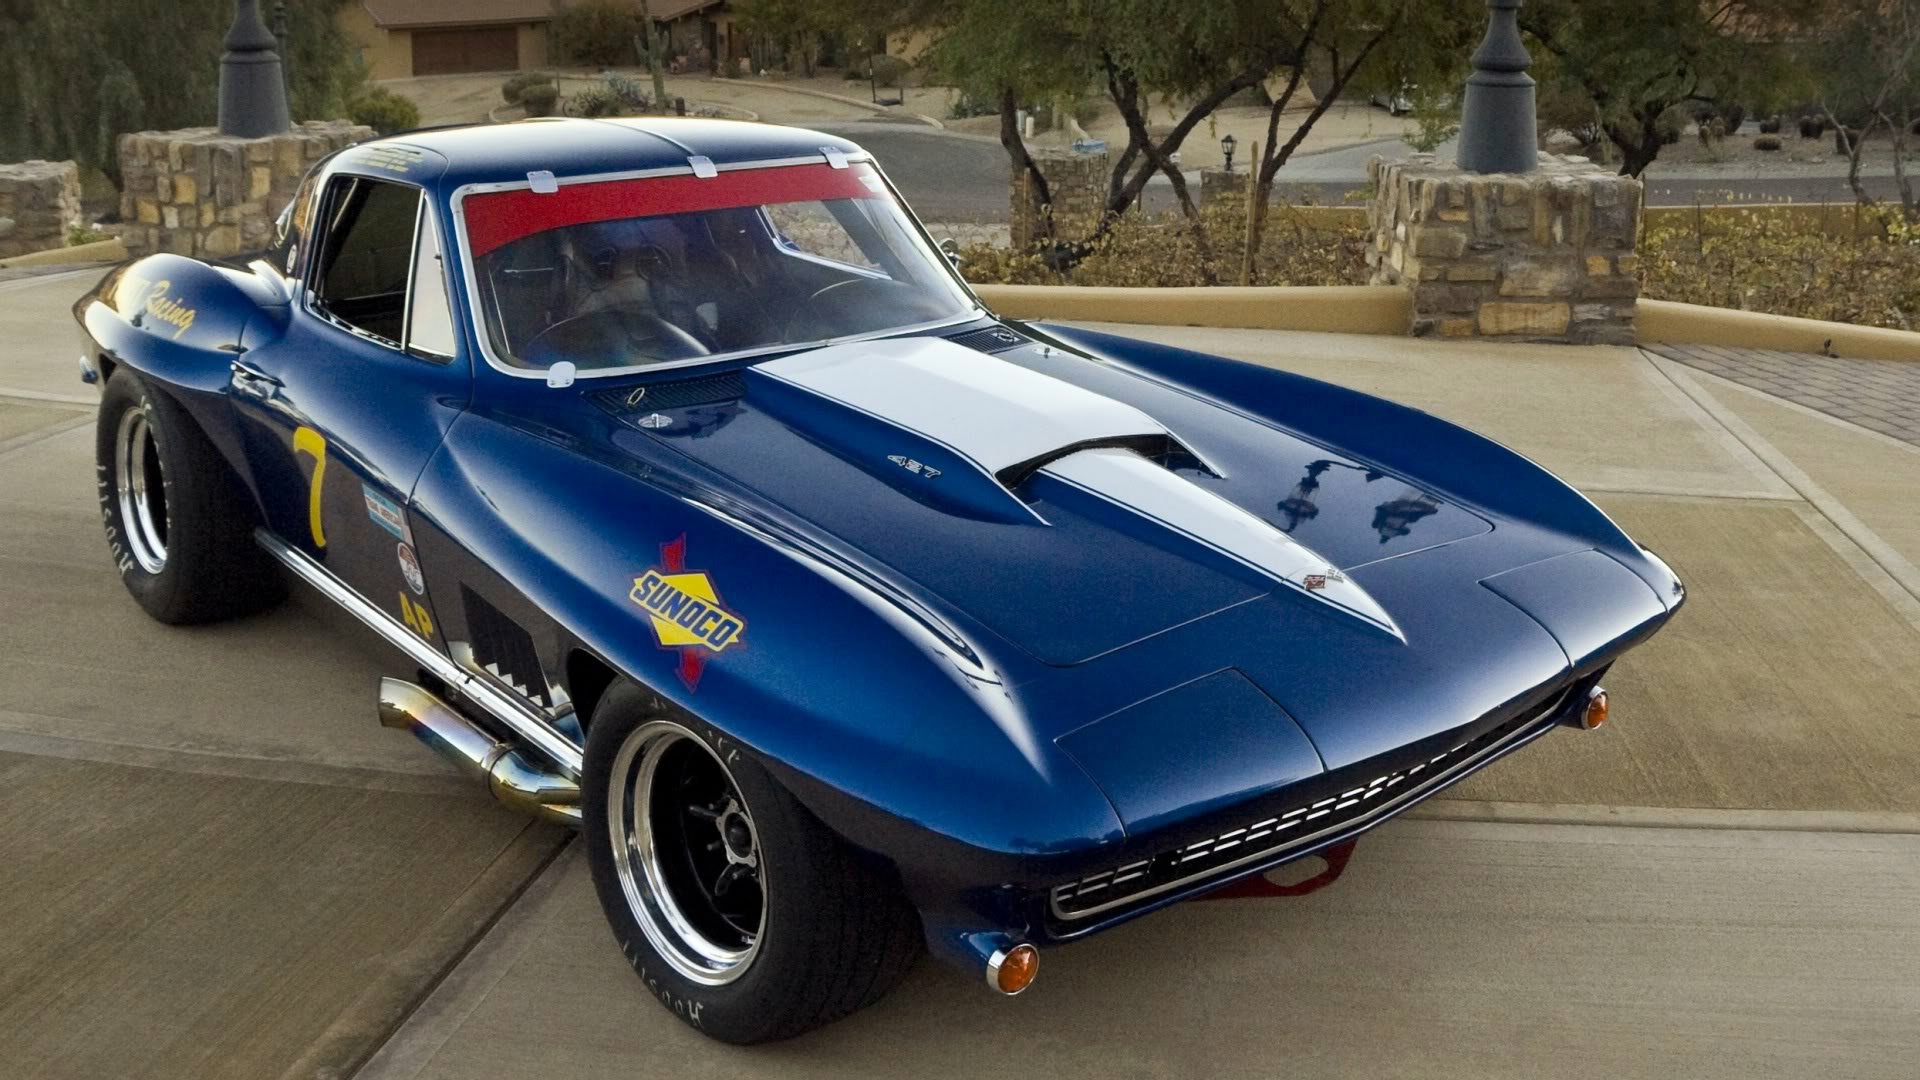 1967 Corvette Stingray HD Wallpaper | Background Image | 1920x1080 | ID